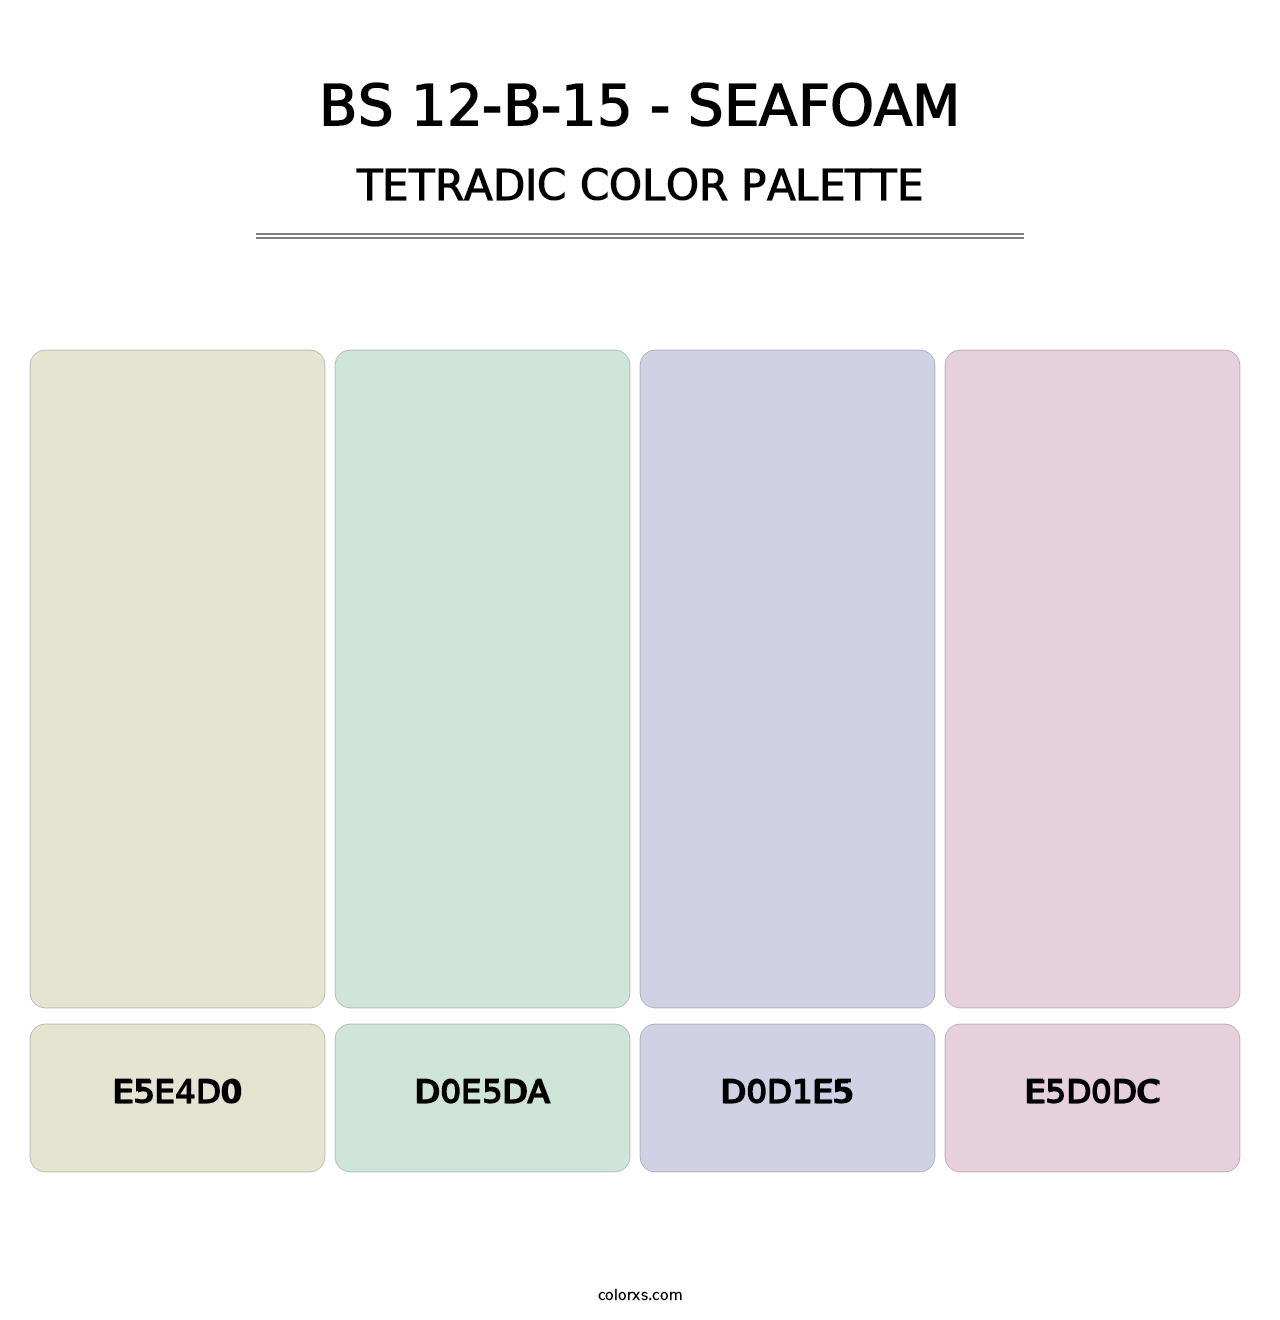 BS 12-B-15 - Seafoam - Tetradic Color Palette